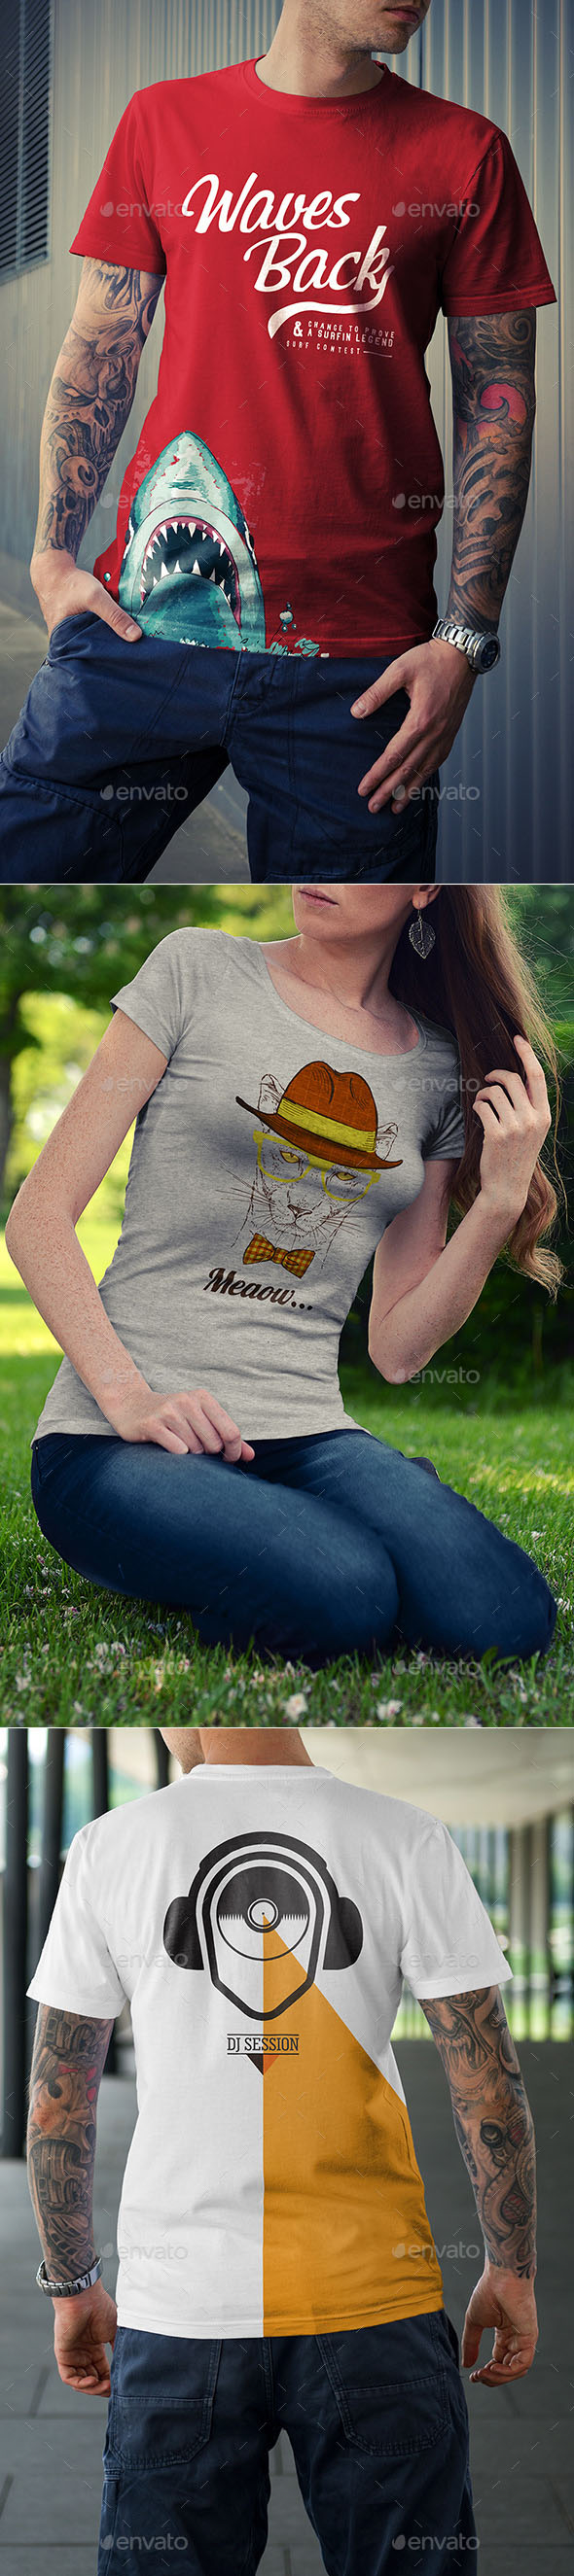 Male & Female T-Shirt Design Mockup